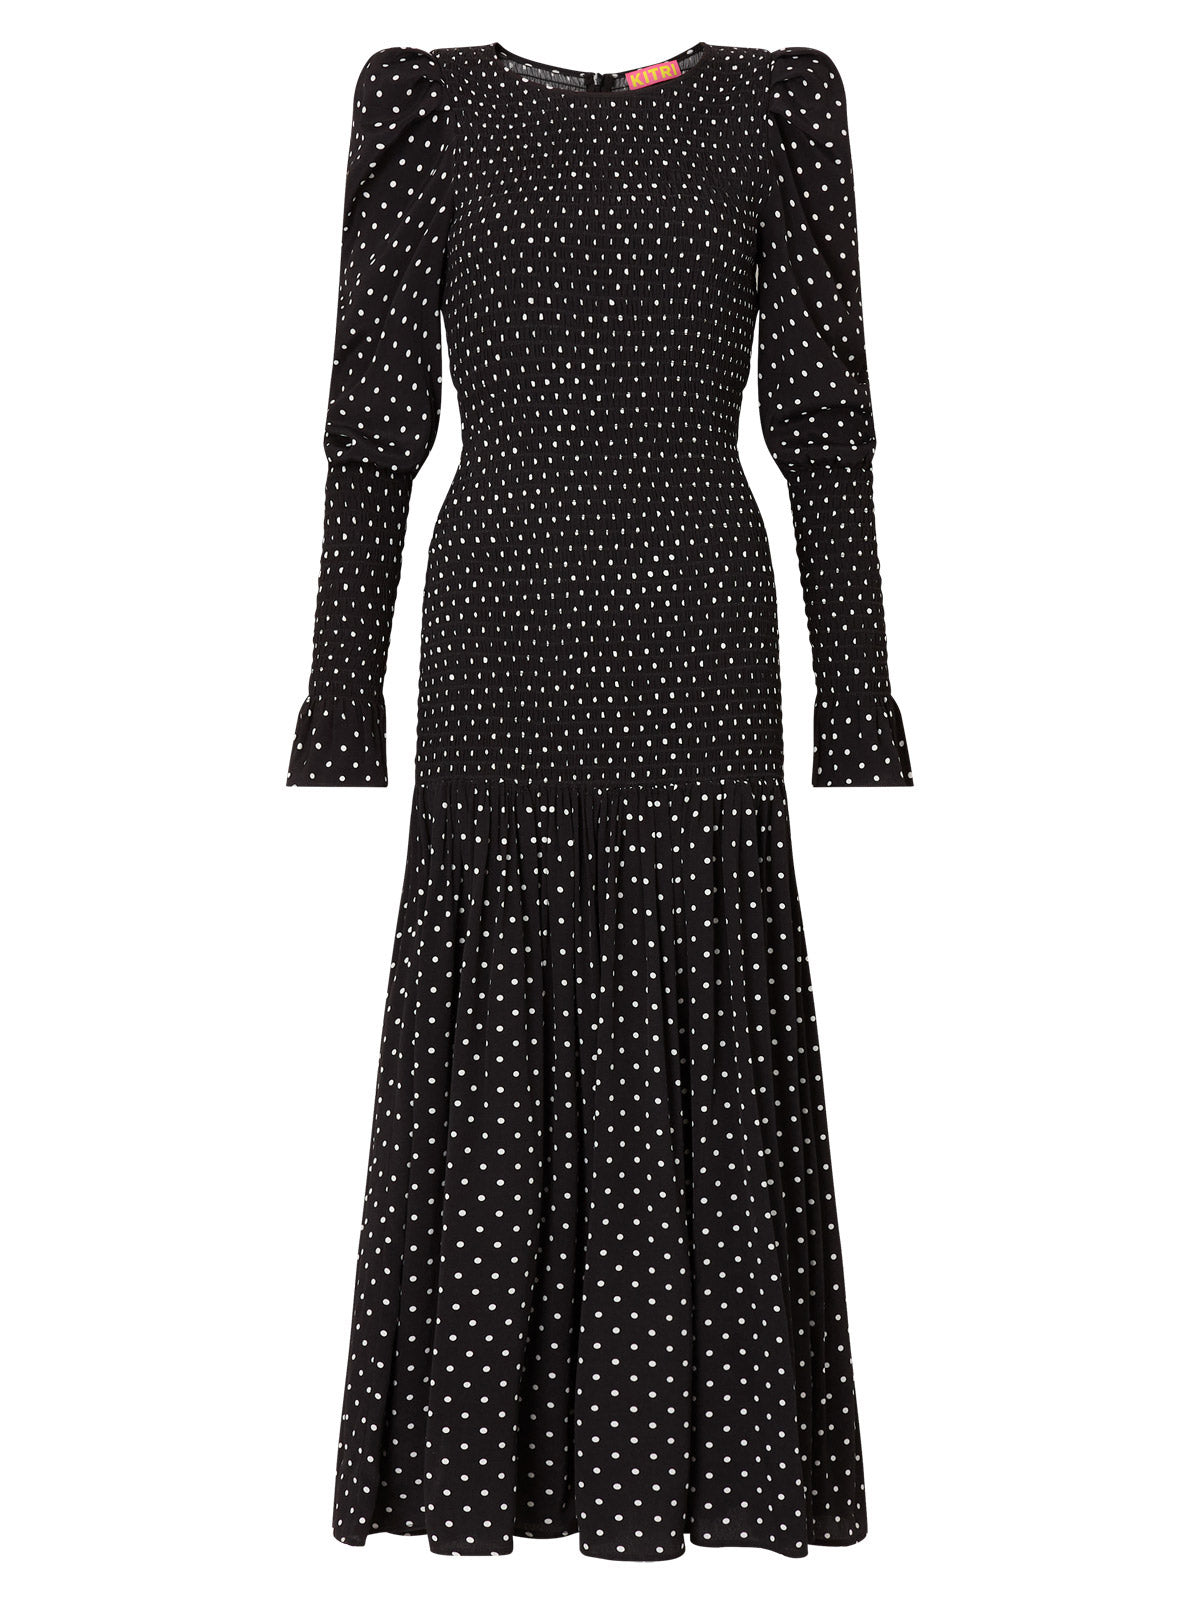 Wren Black Polka Dot Shirred Dress By KITRI Studio